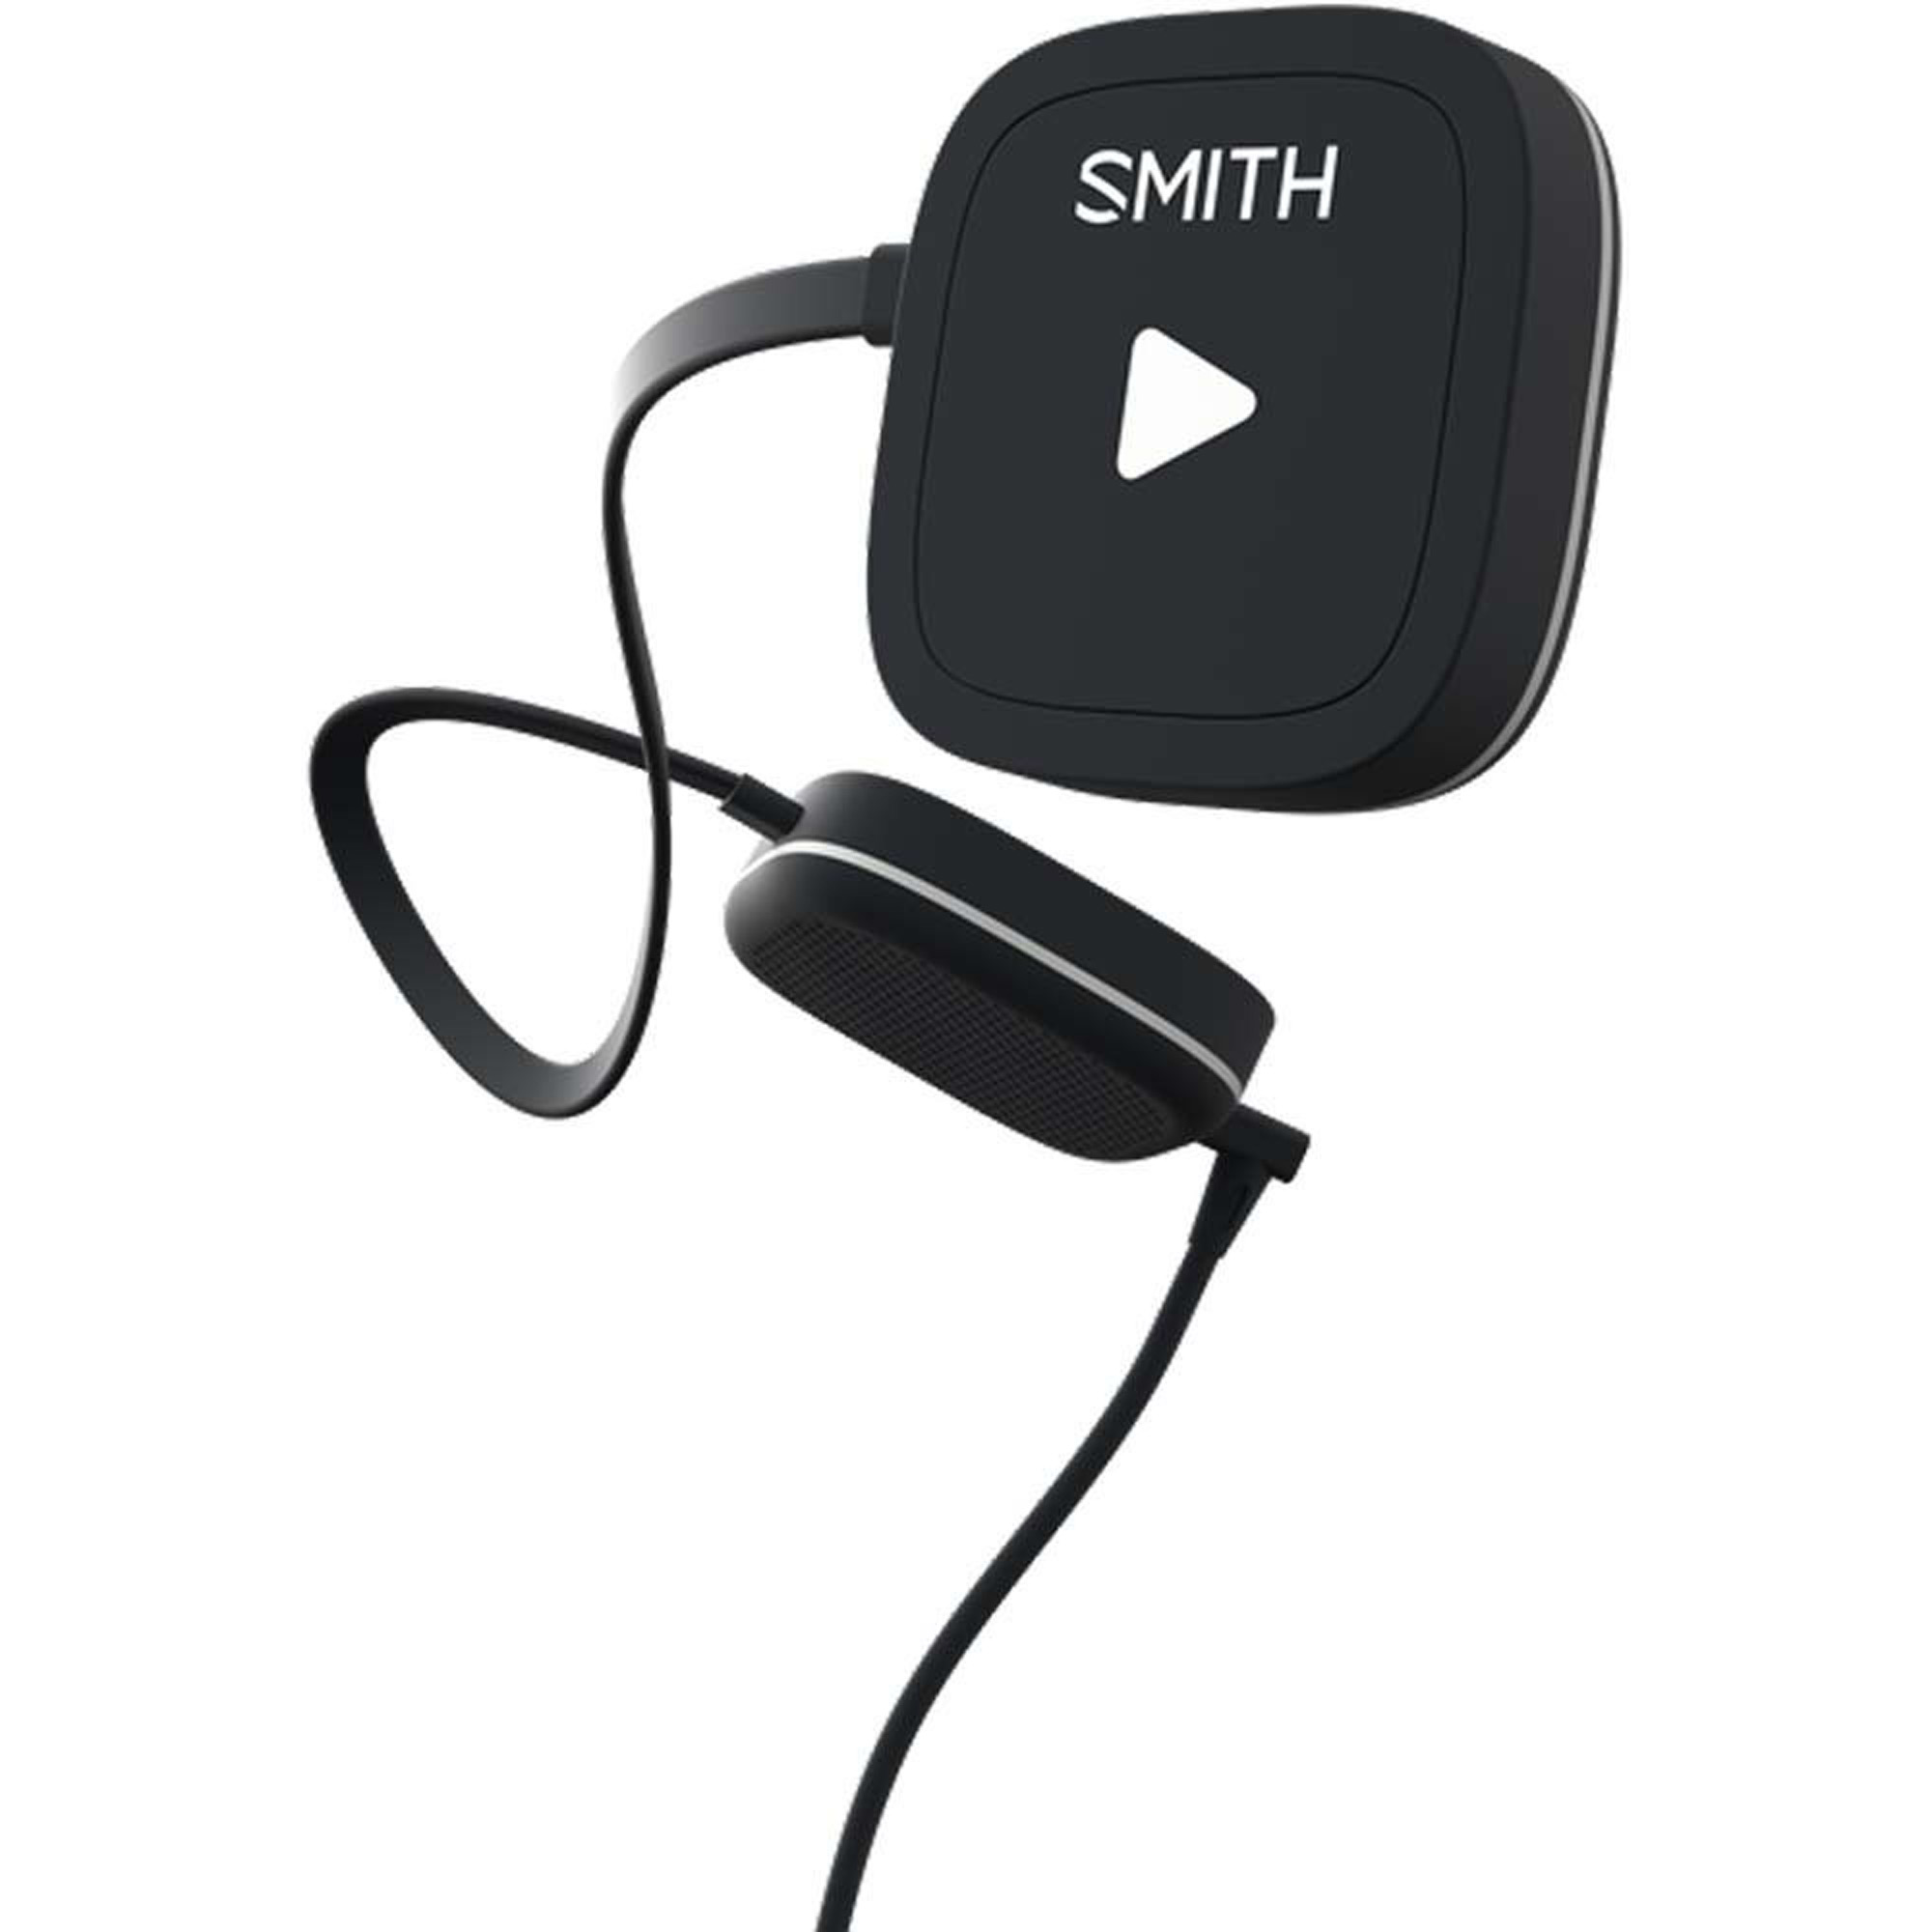 Smith Aleck Wired Helmet Audio & Communication Kit